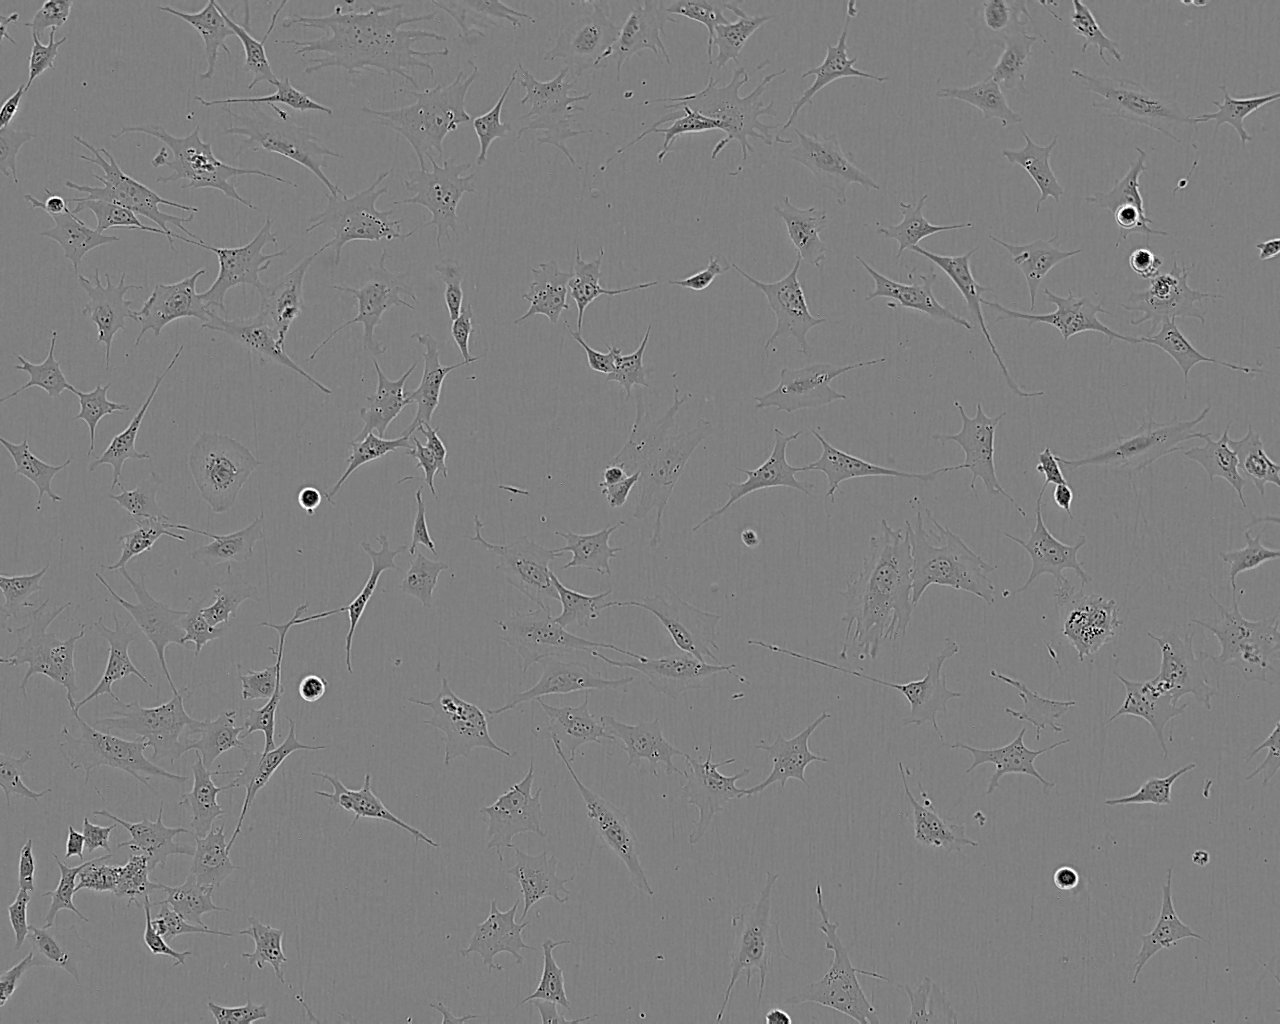 MUG-Chor1 epithelioid cells人骶骨脊索瘤细胞系